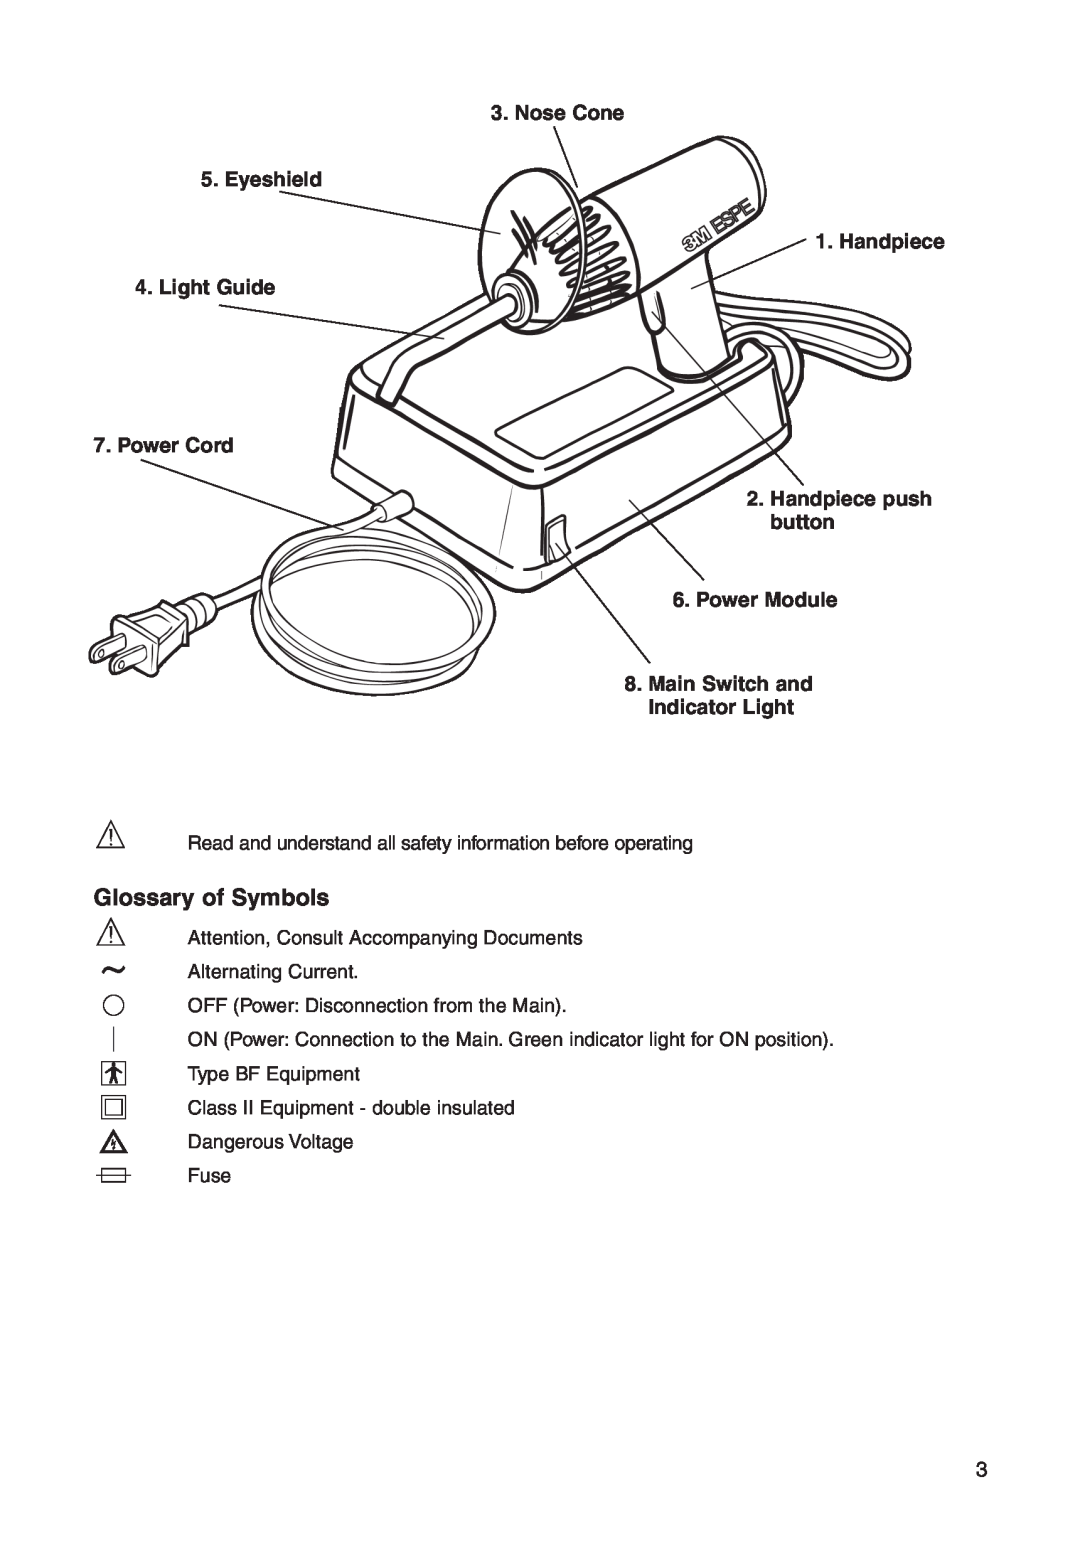 3M M5560 manual Glossary of Symbols, Nose Cone 5. Eyeshield 1. Handpiece 4. Light Guide 7. Power Cord, Indicator Light 